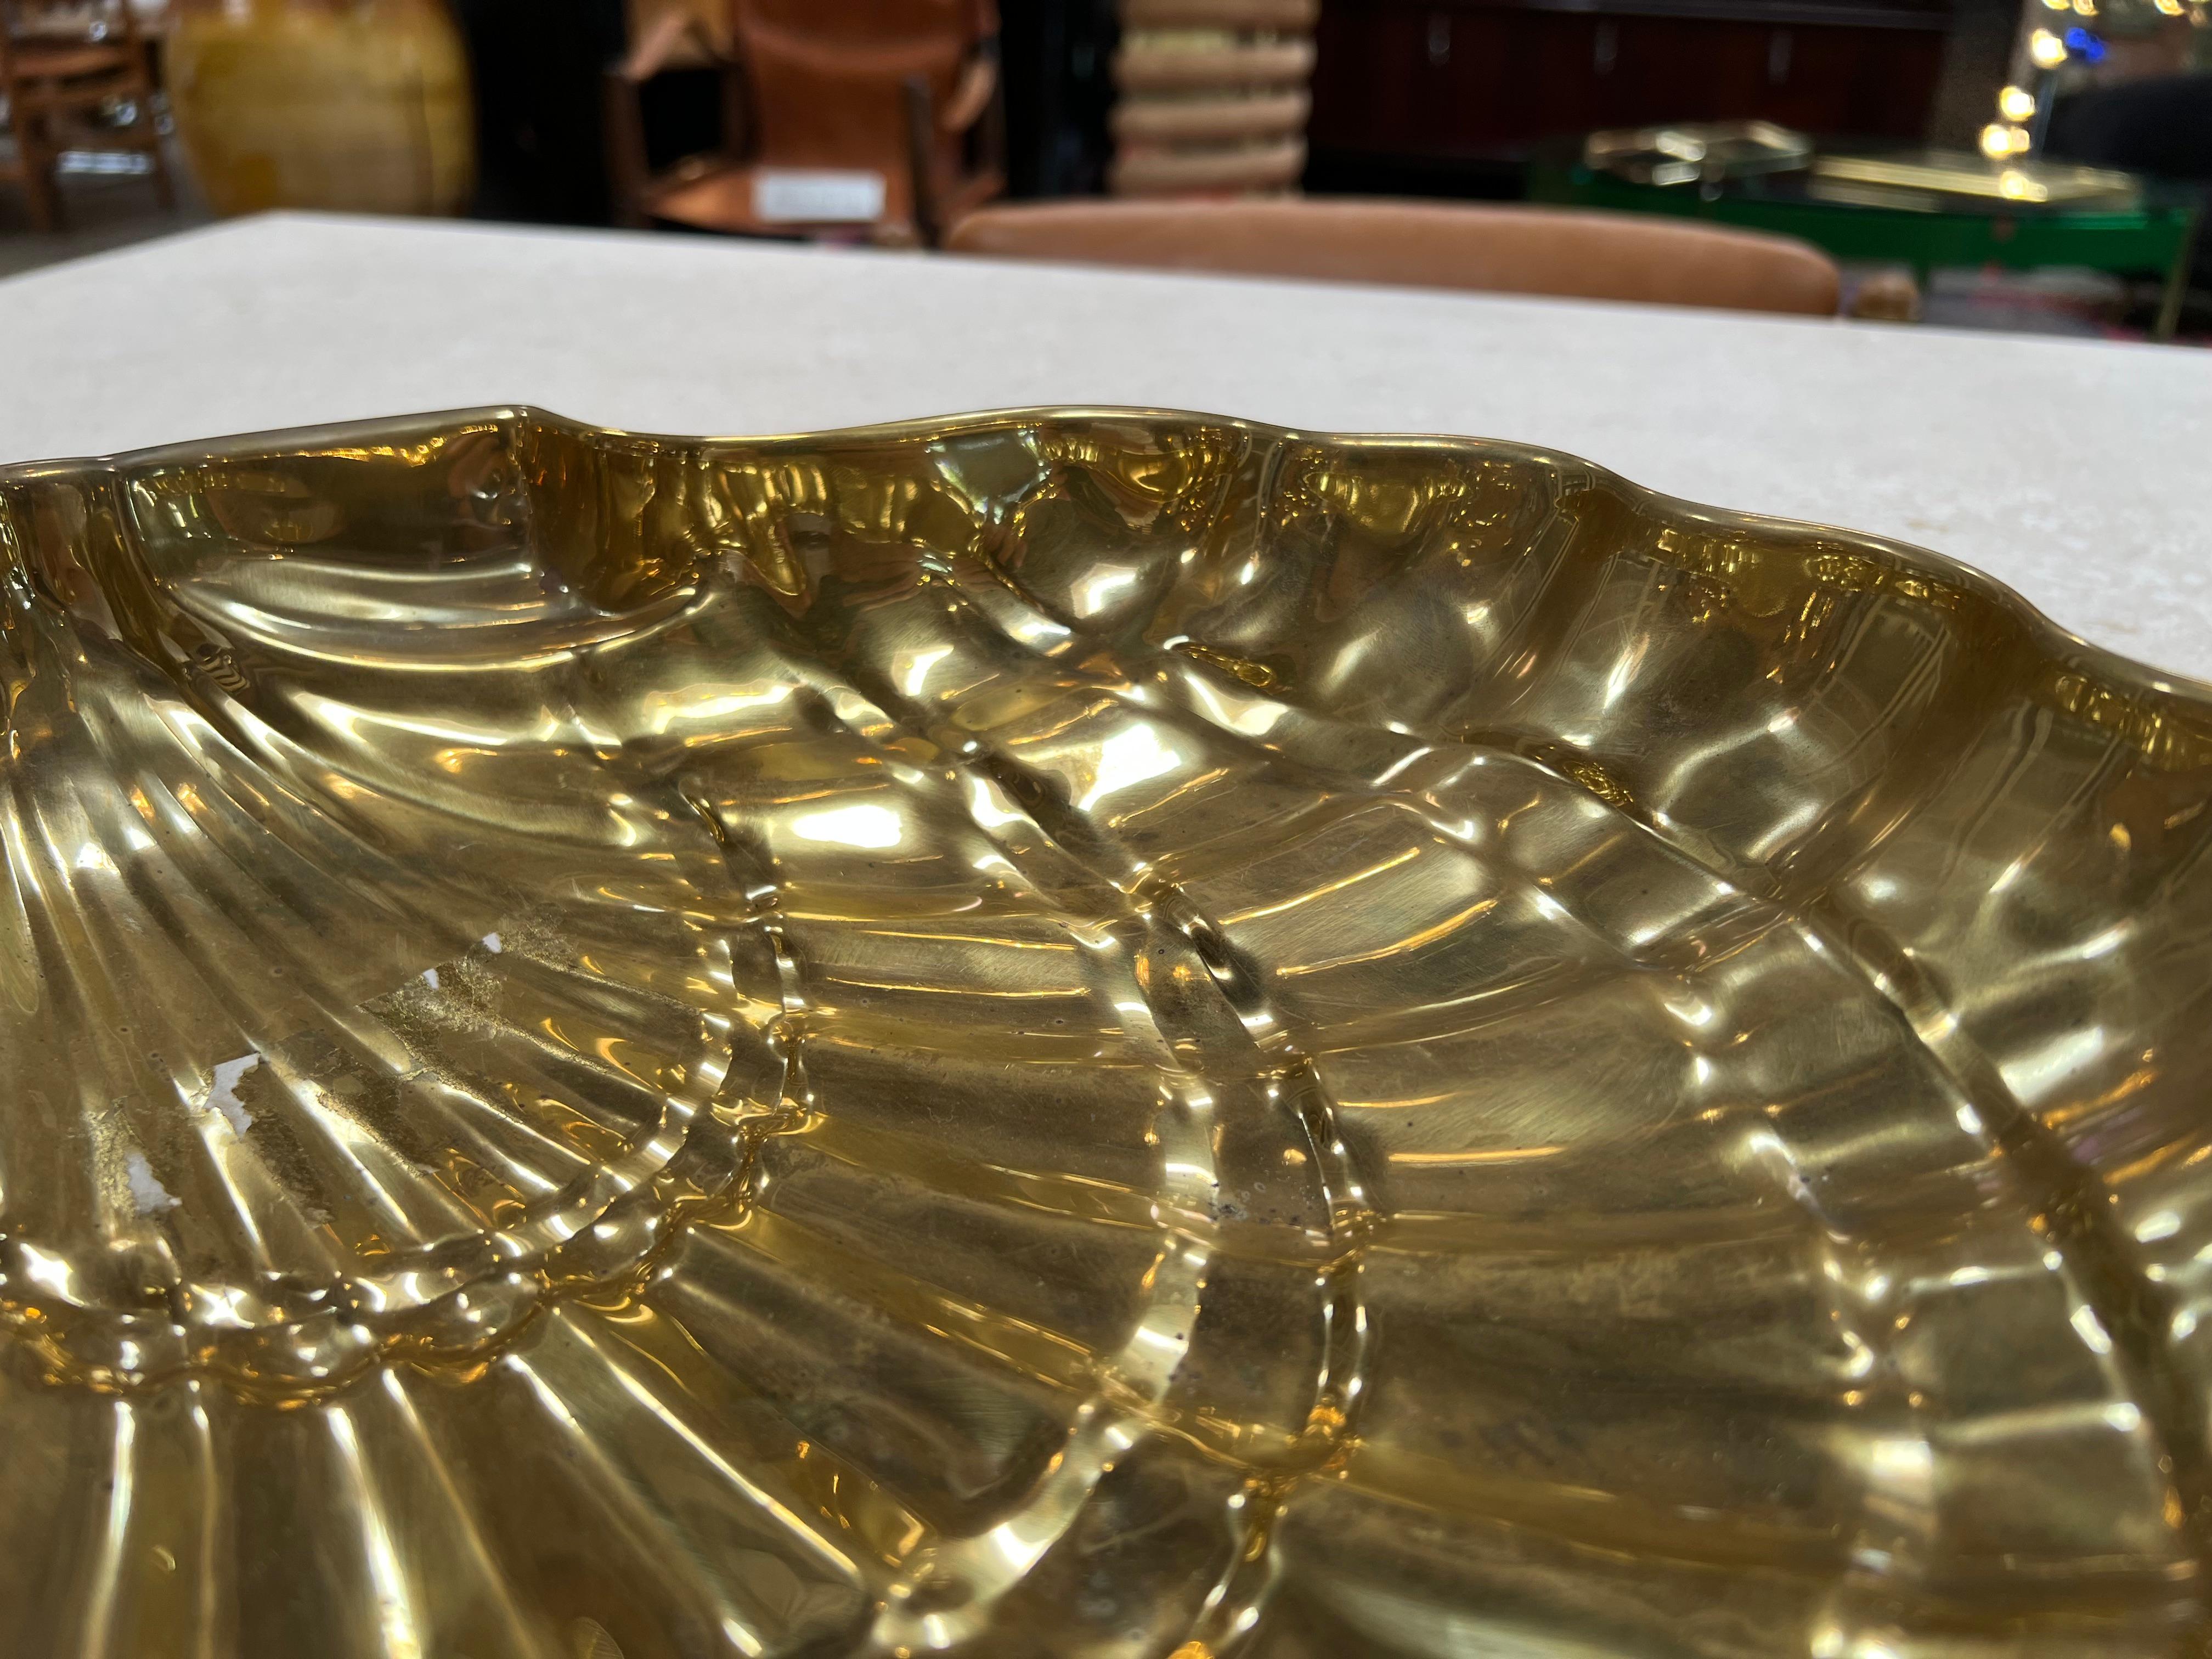 Beautiful Italian Decorative fully brass shell made in 1980s

